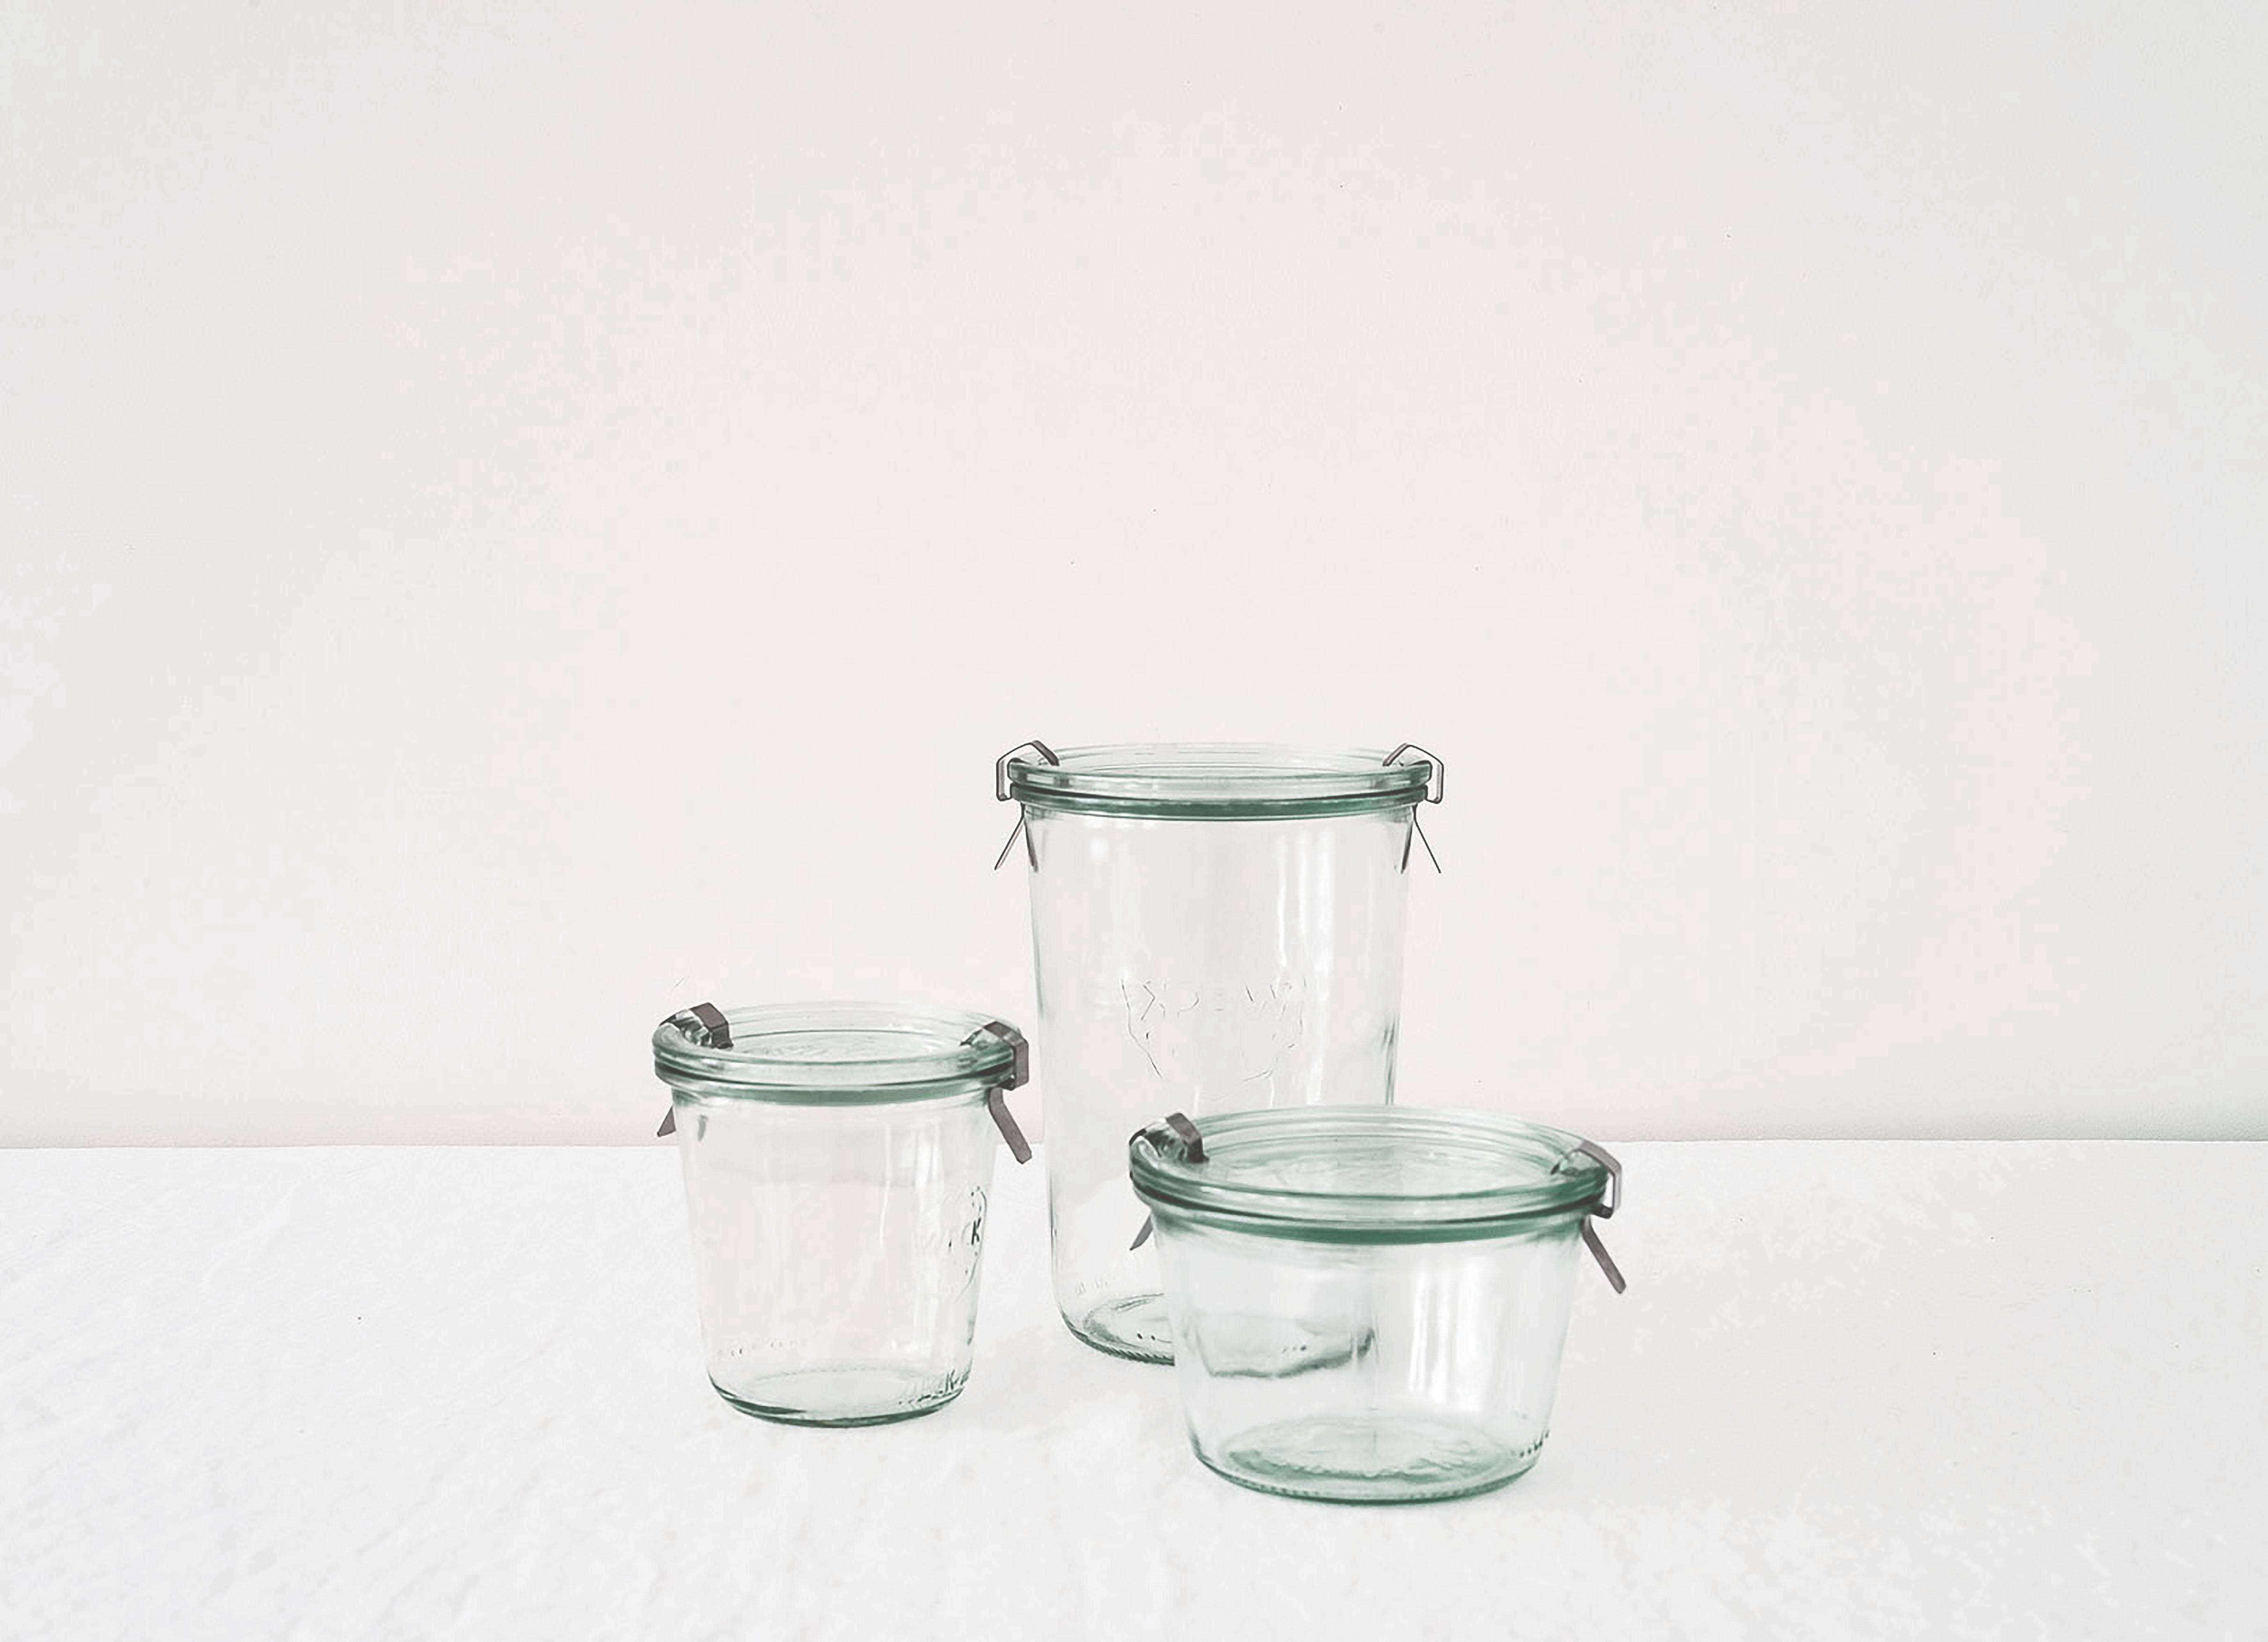 https://www.remodelista.com/wp-content/uploads/2017/11/weck-mold-jars-organized-home-stock.jpg